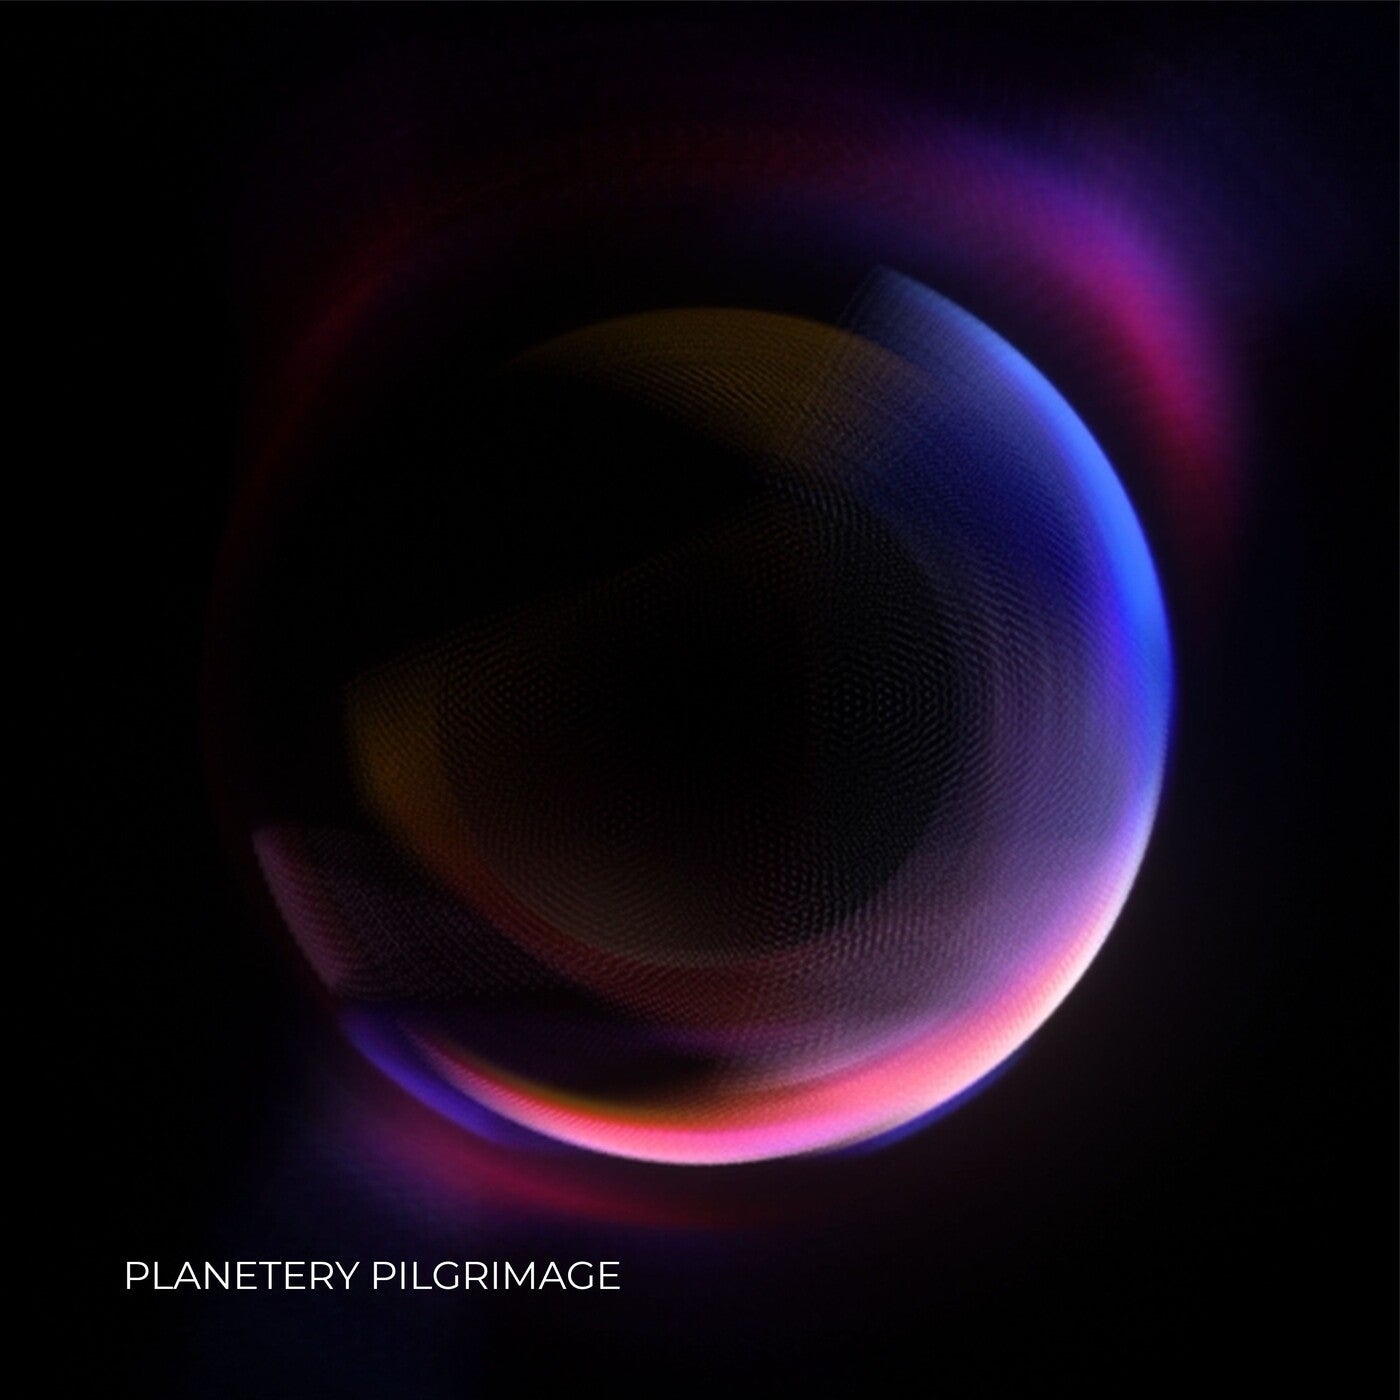 Planetary Pilgrimage